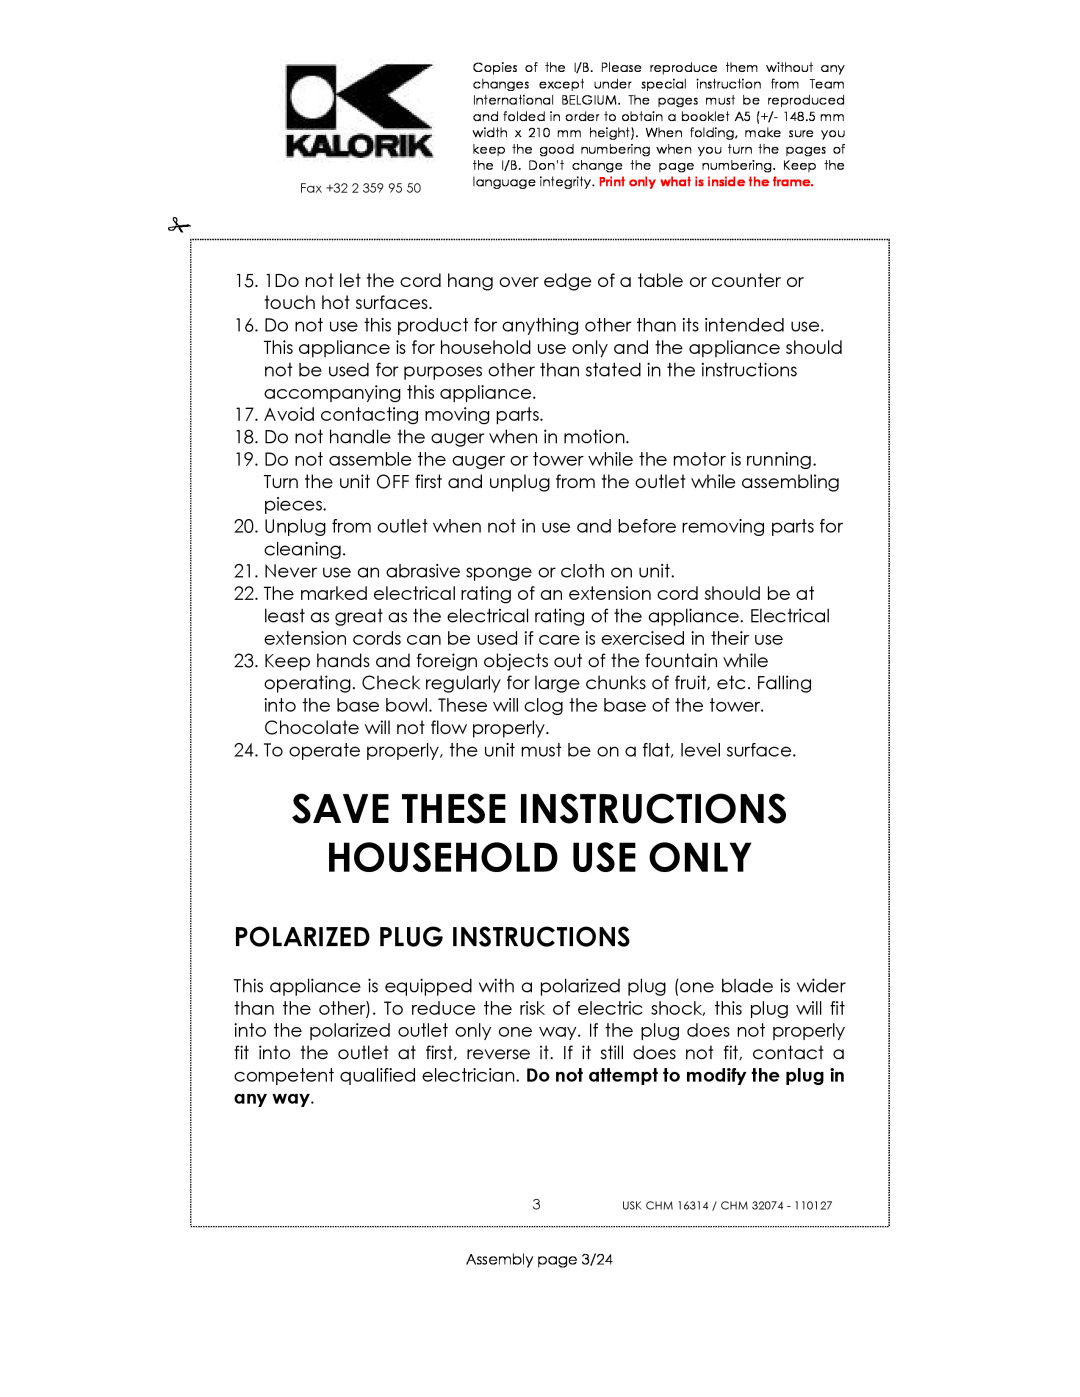 Kalorik CHM 32074, CHM 16314 manual Save These Instructions Household Use Only, Polarized Plug Instructions 